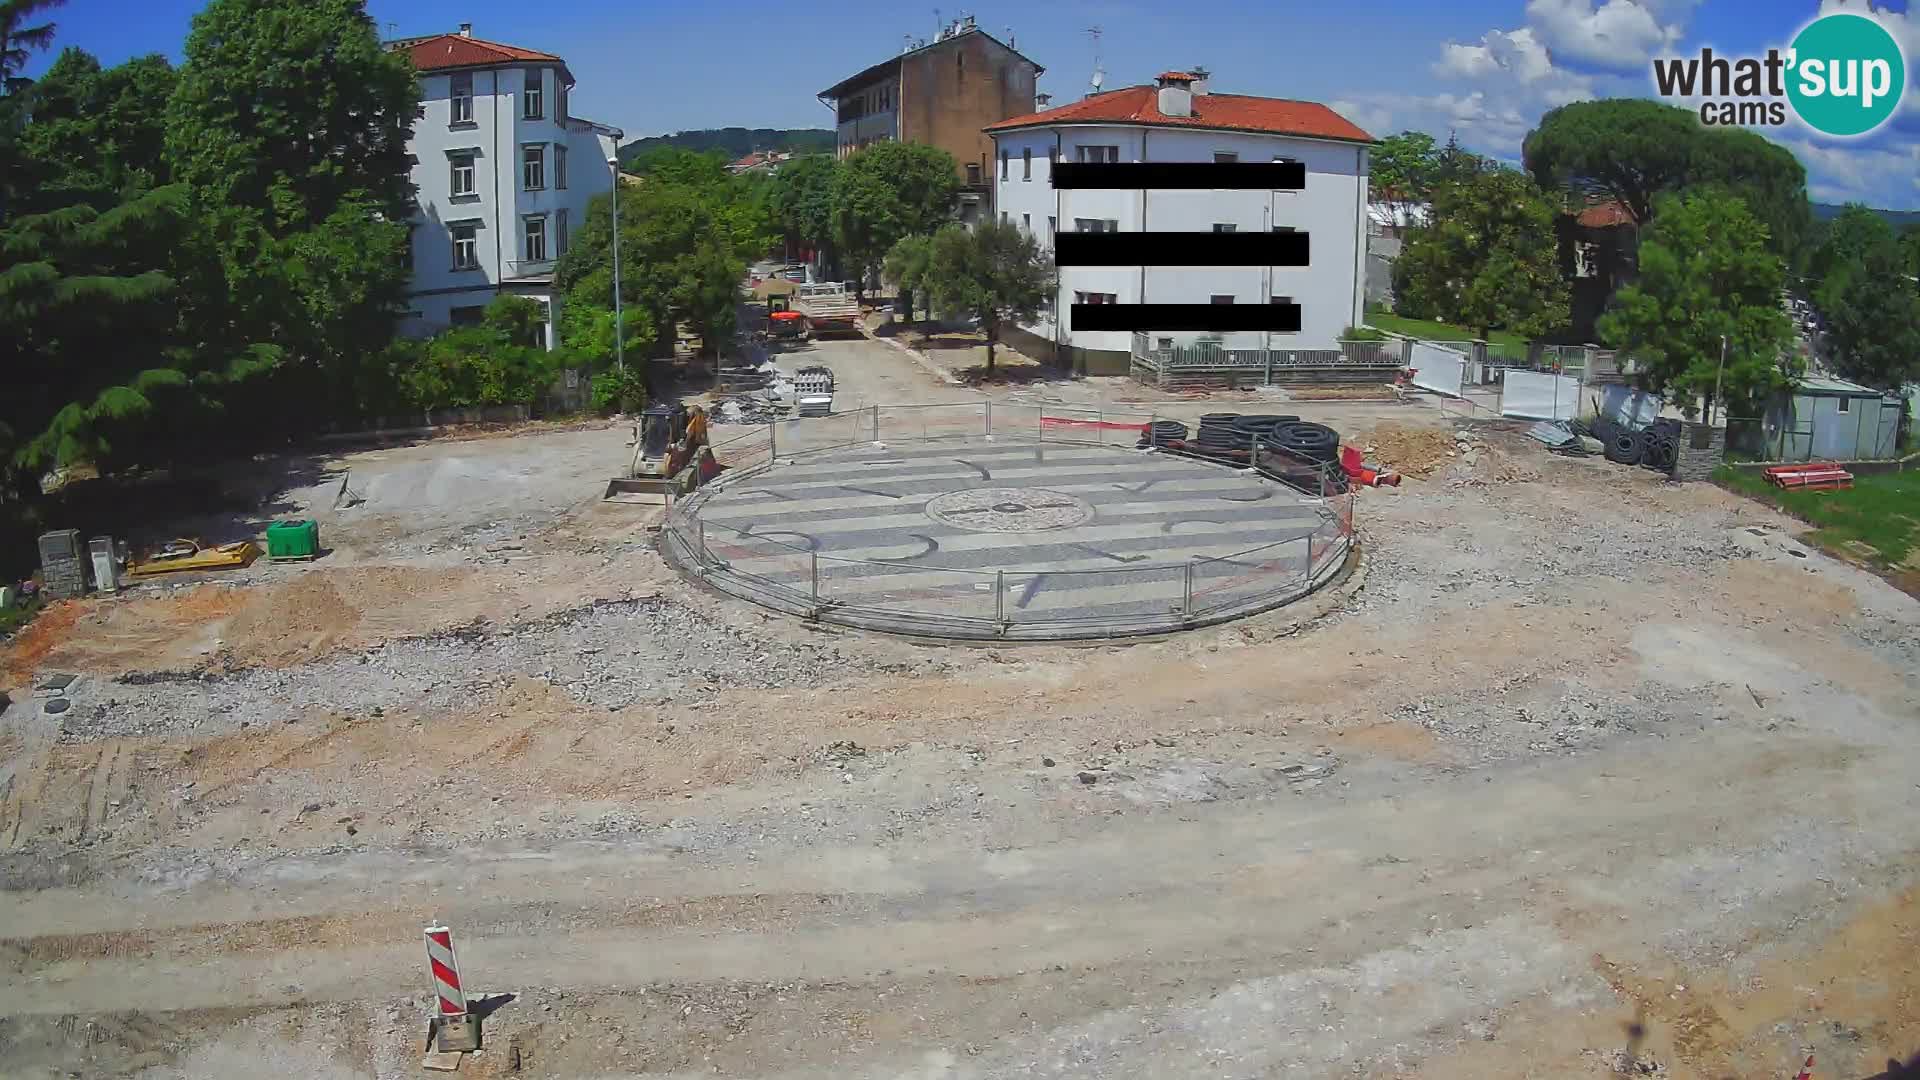 Trg Evrope Nova Gorica / Transalpina Gorica | Gorizia